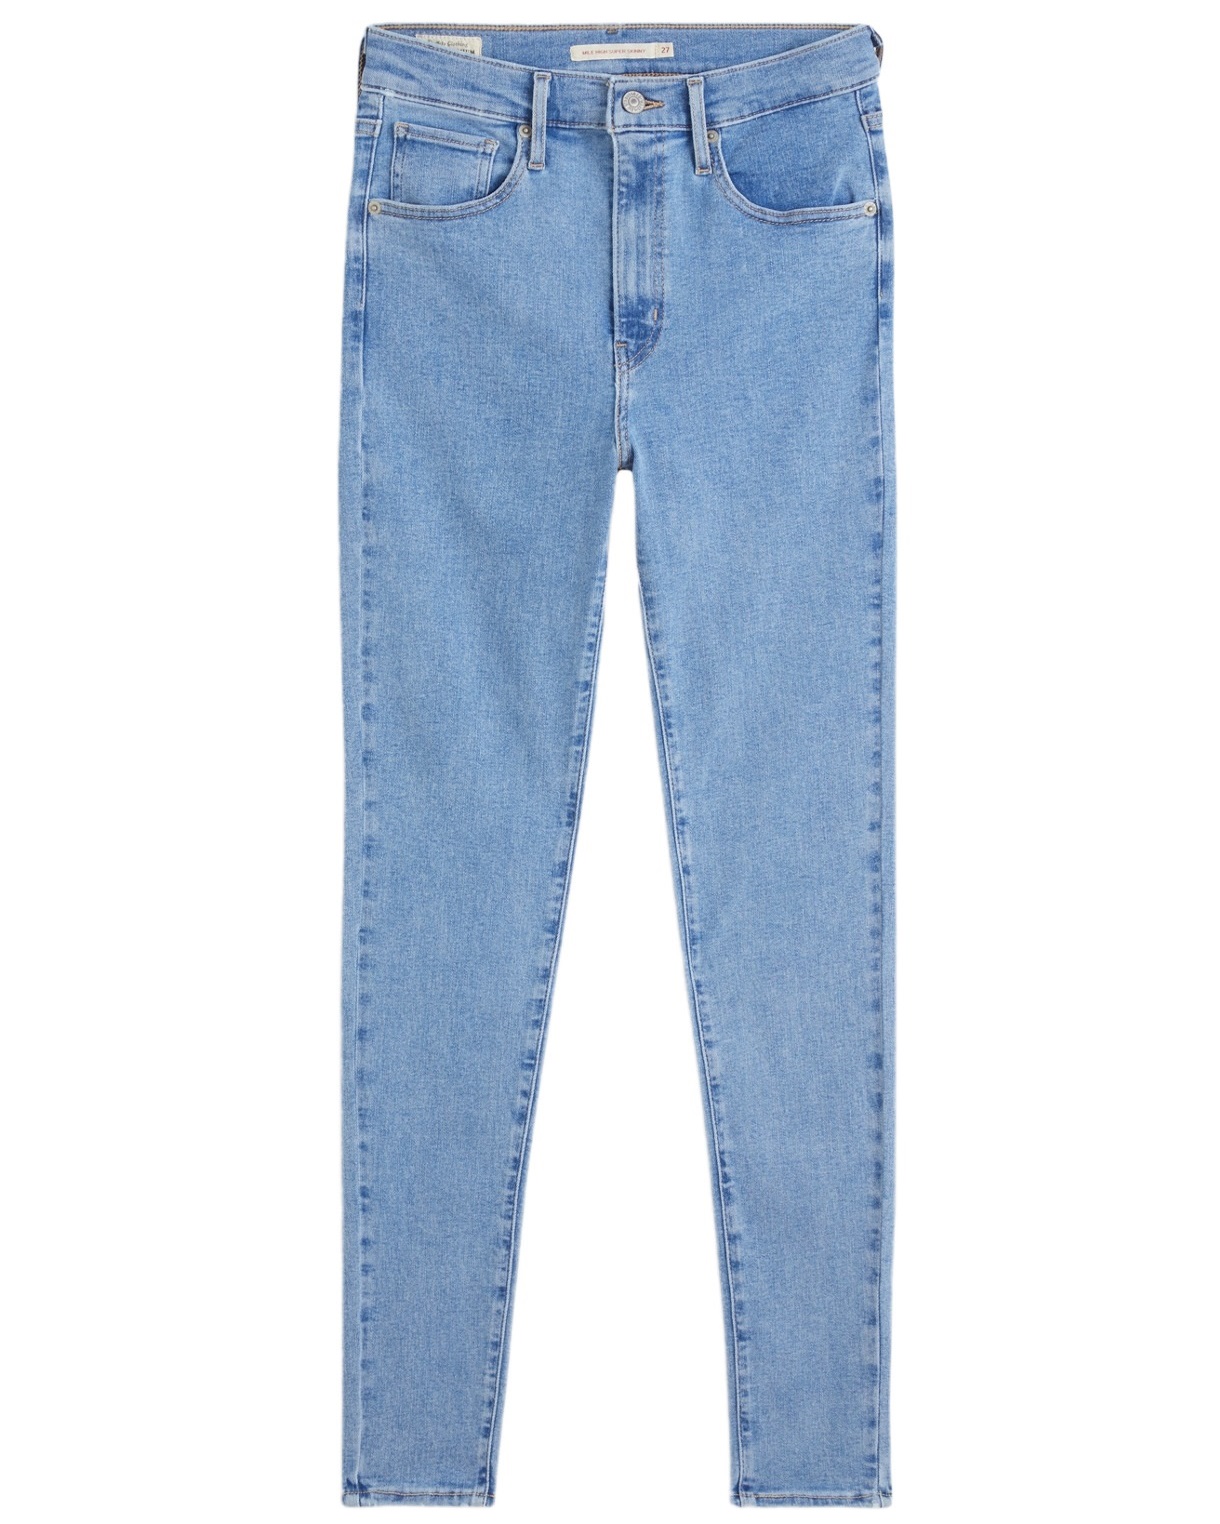 Джинсы женские Levi's Mile High Super Skinny Naples Stone Jeans голубые 44